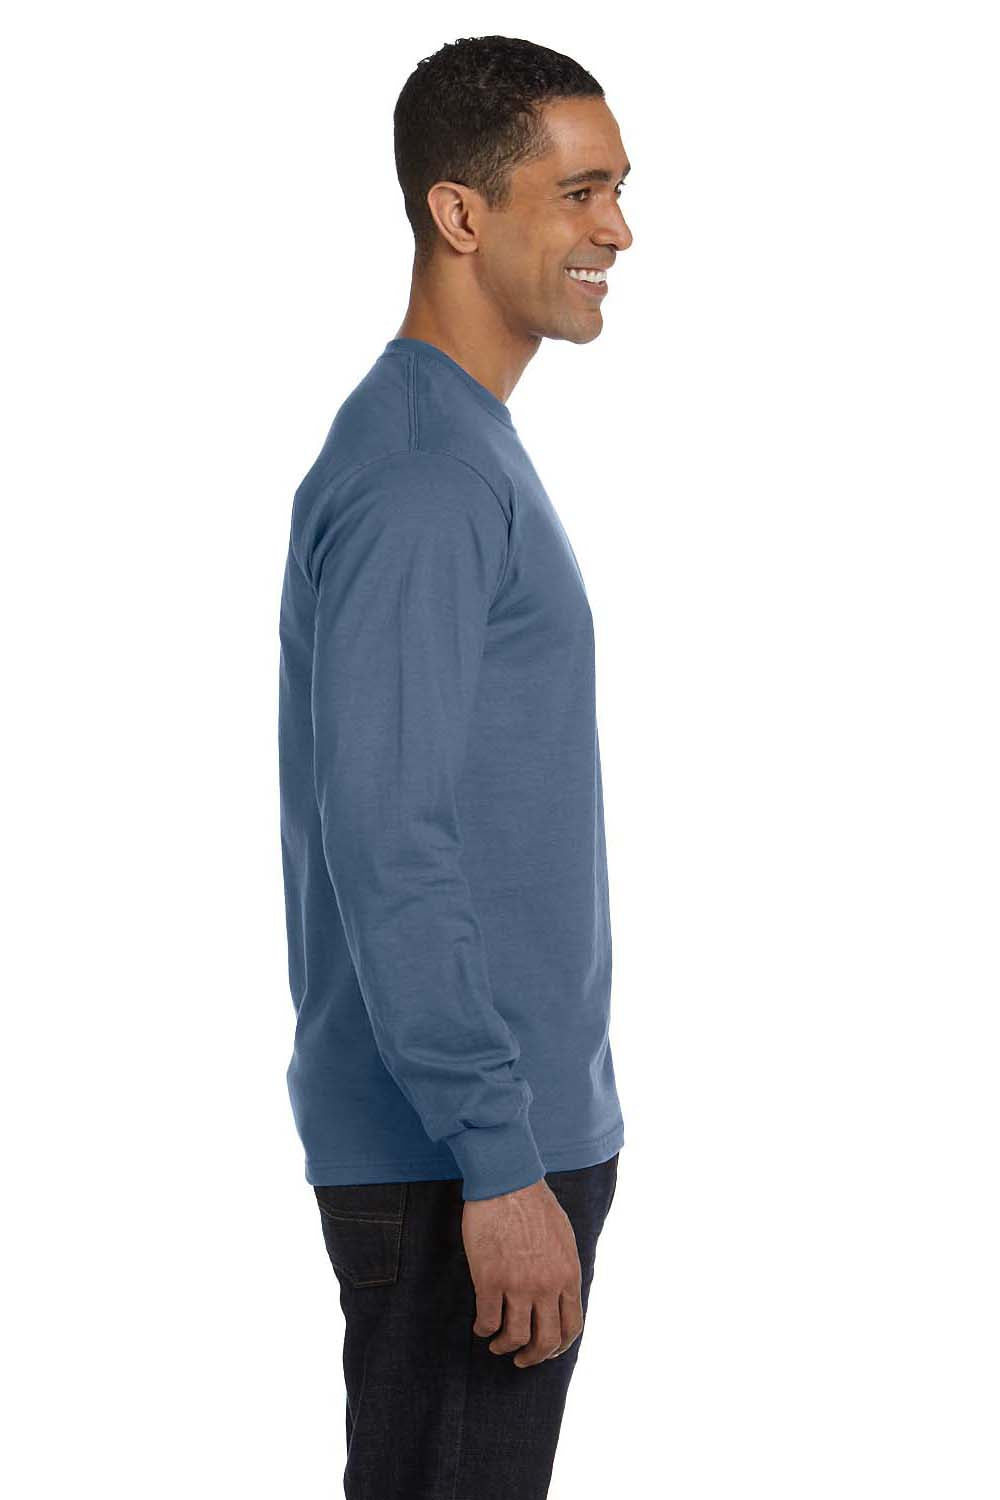 Hanes 5186 Mens Beefy-T Long Sleeve Crewneck T-Shirt Denim Blue Side